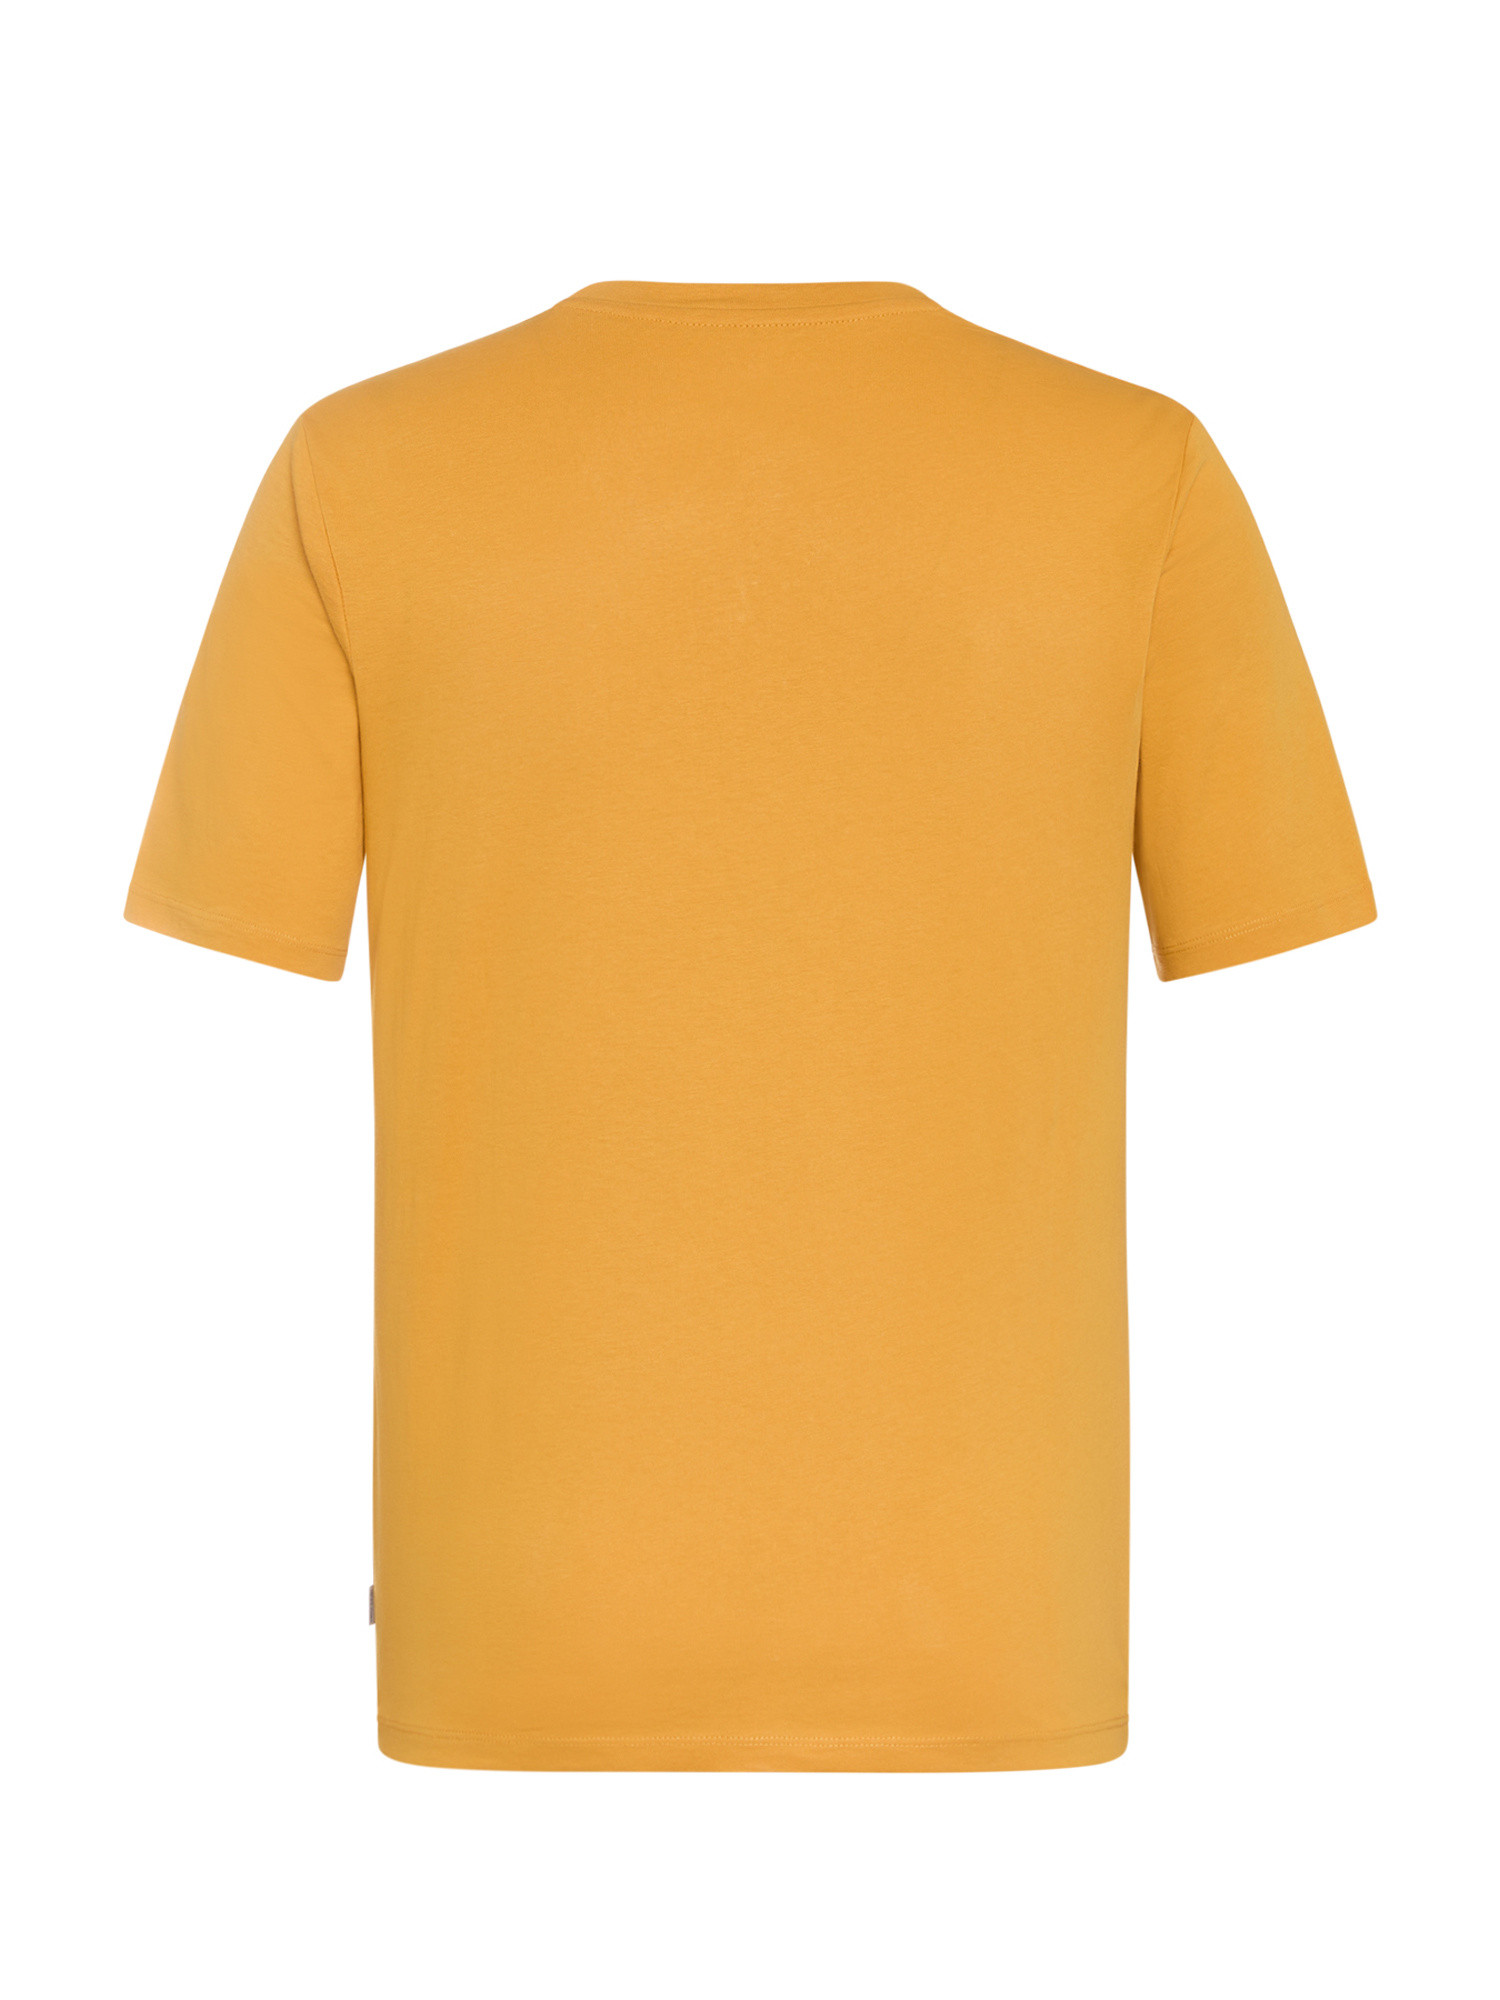 Jack & Jones - Cotton T-shirt, Yellow, large image number 1